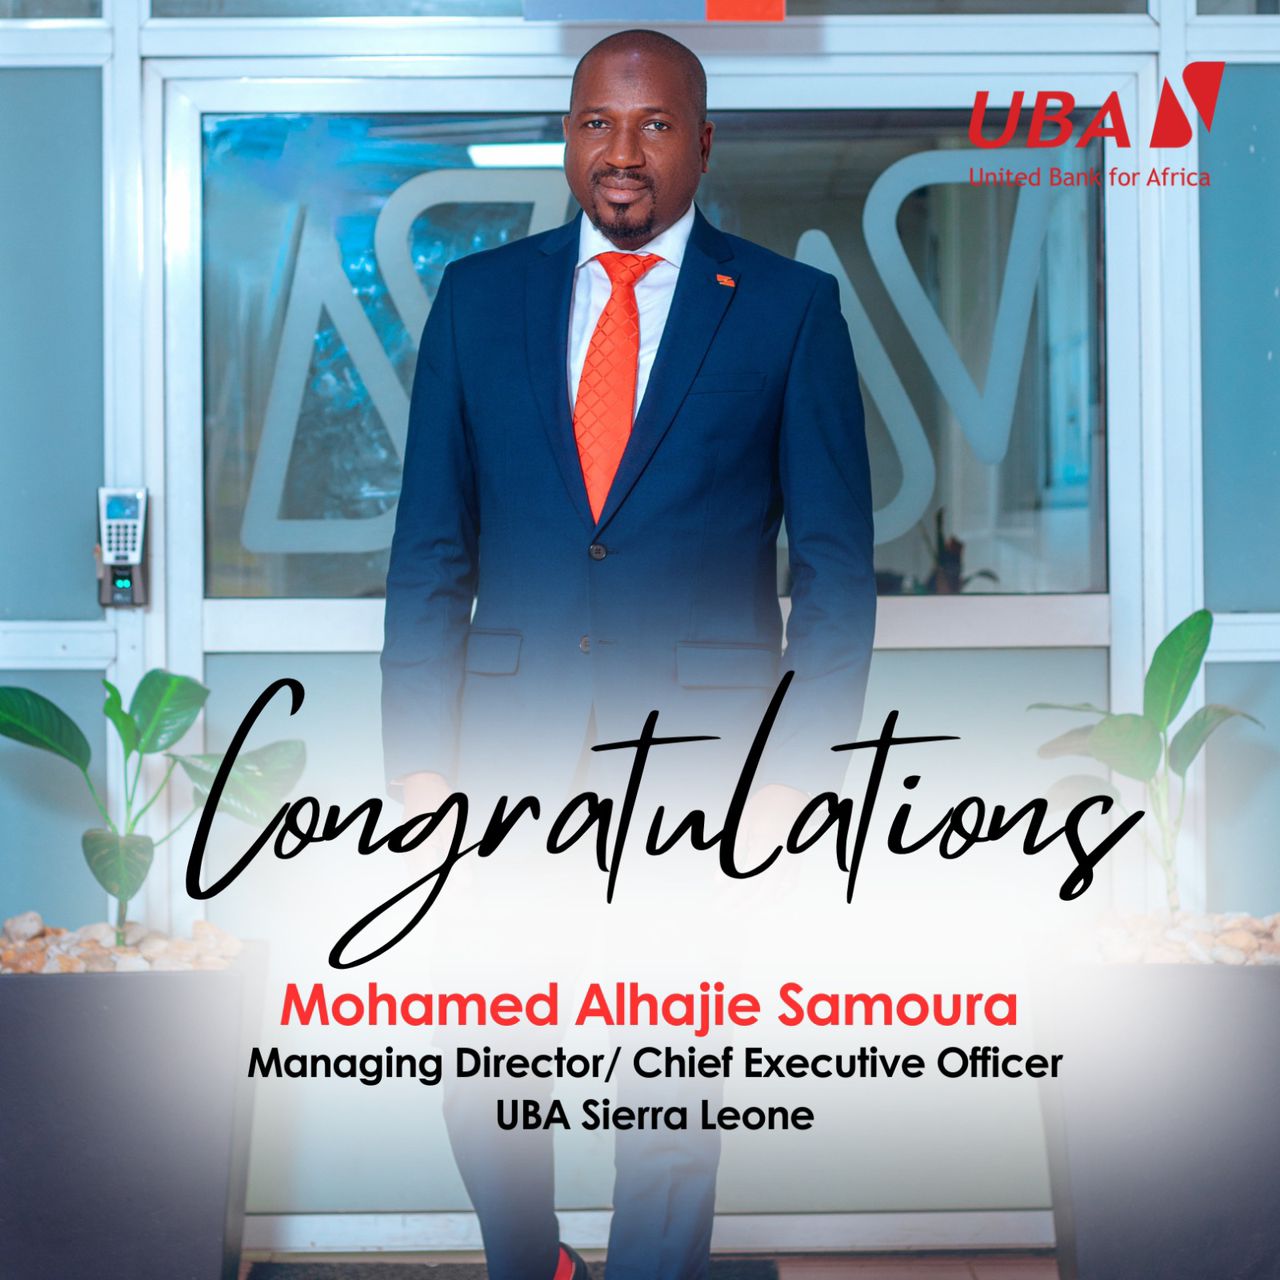 Mohamed Alhajie Samoura as Managing Director/CEO of UBA Sierra Leone